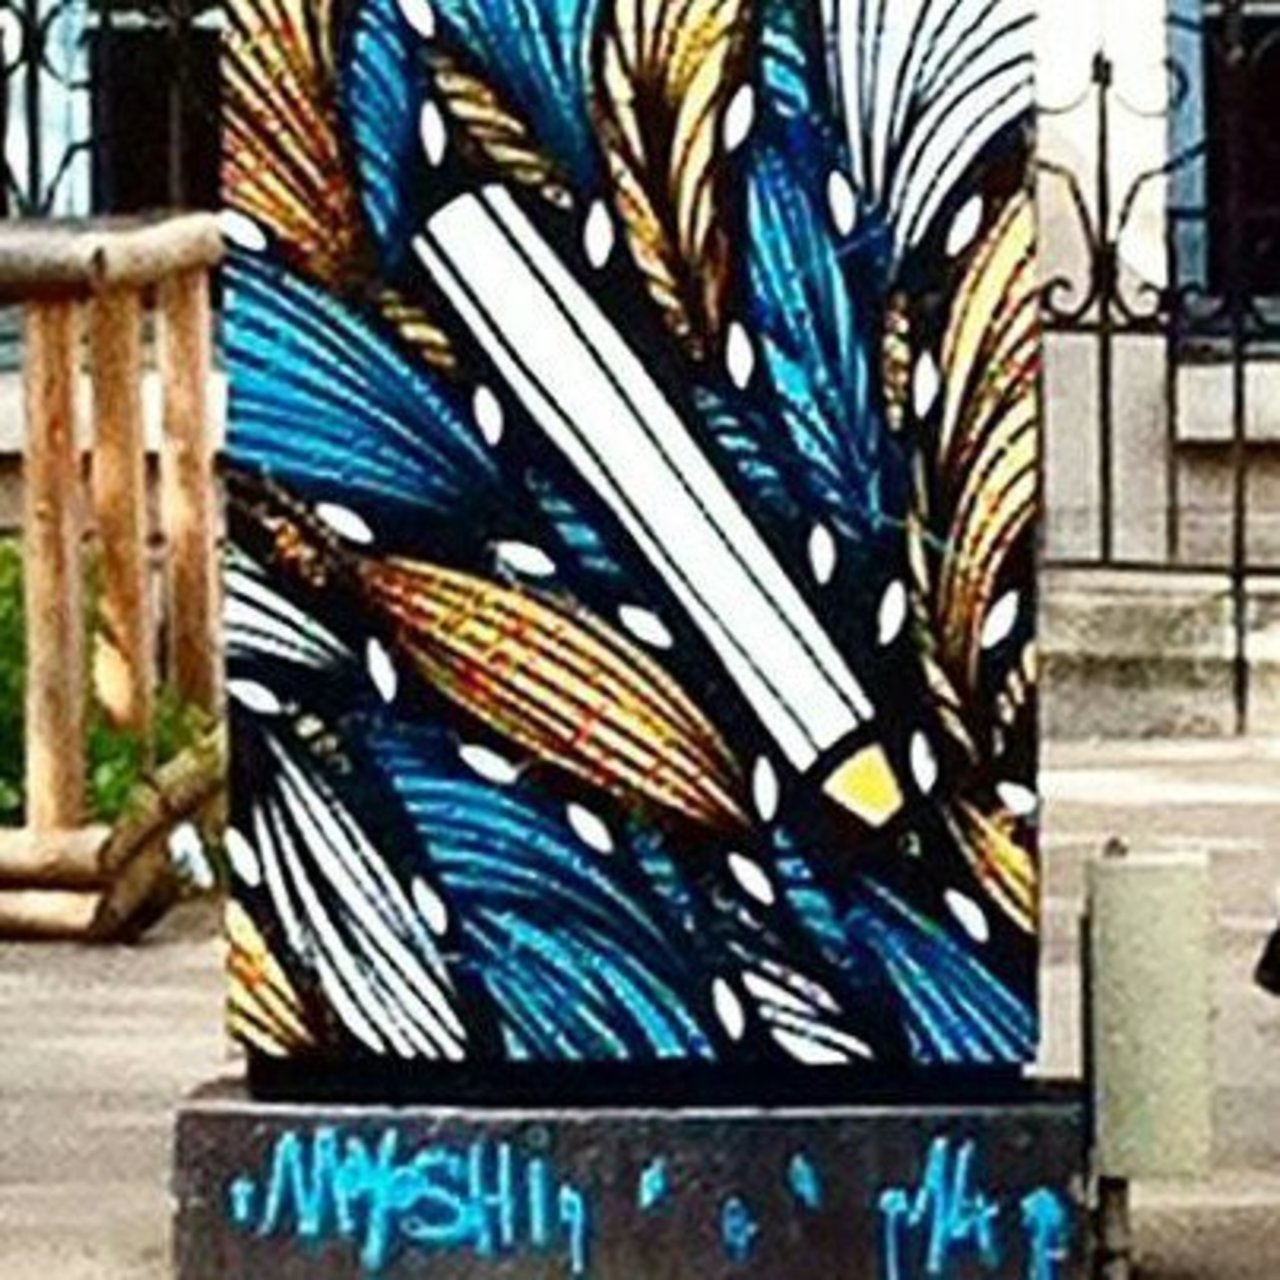 #streetart #streetarteverywhere #streetshot #graffitiart #graffiti #arturbain #urbanart #armoireelectrique #stencil… https://t.co/gvieWbeJn7